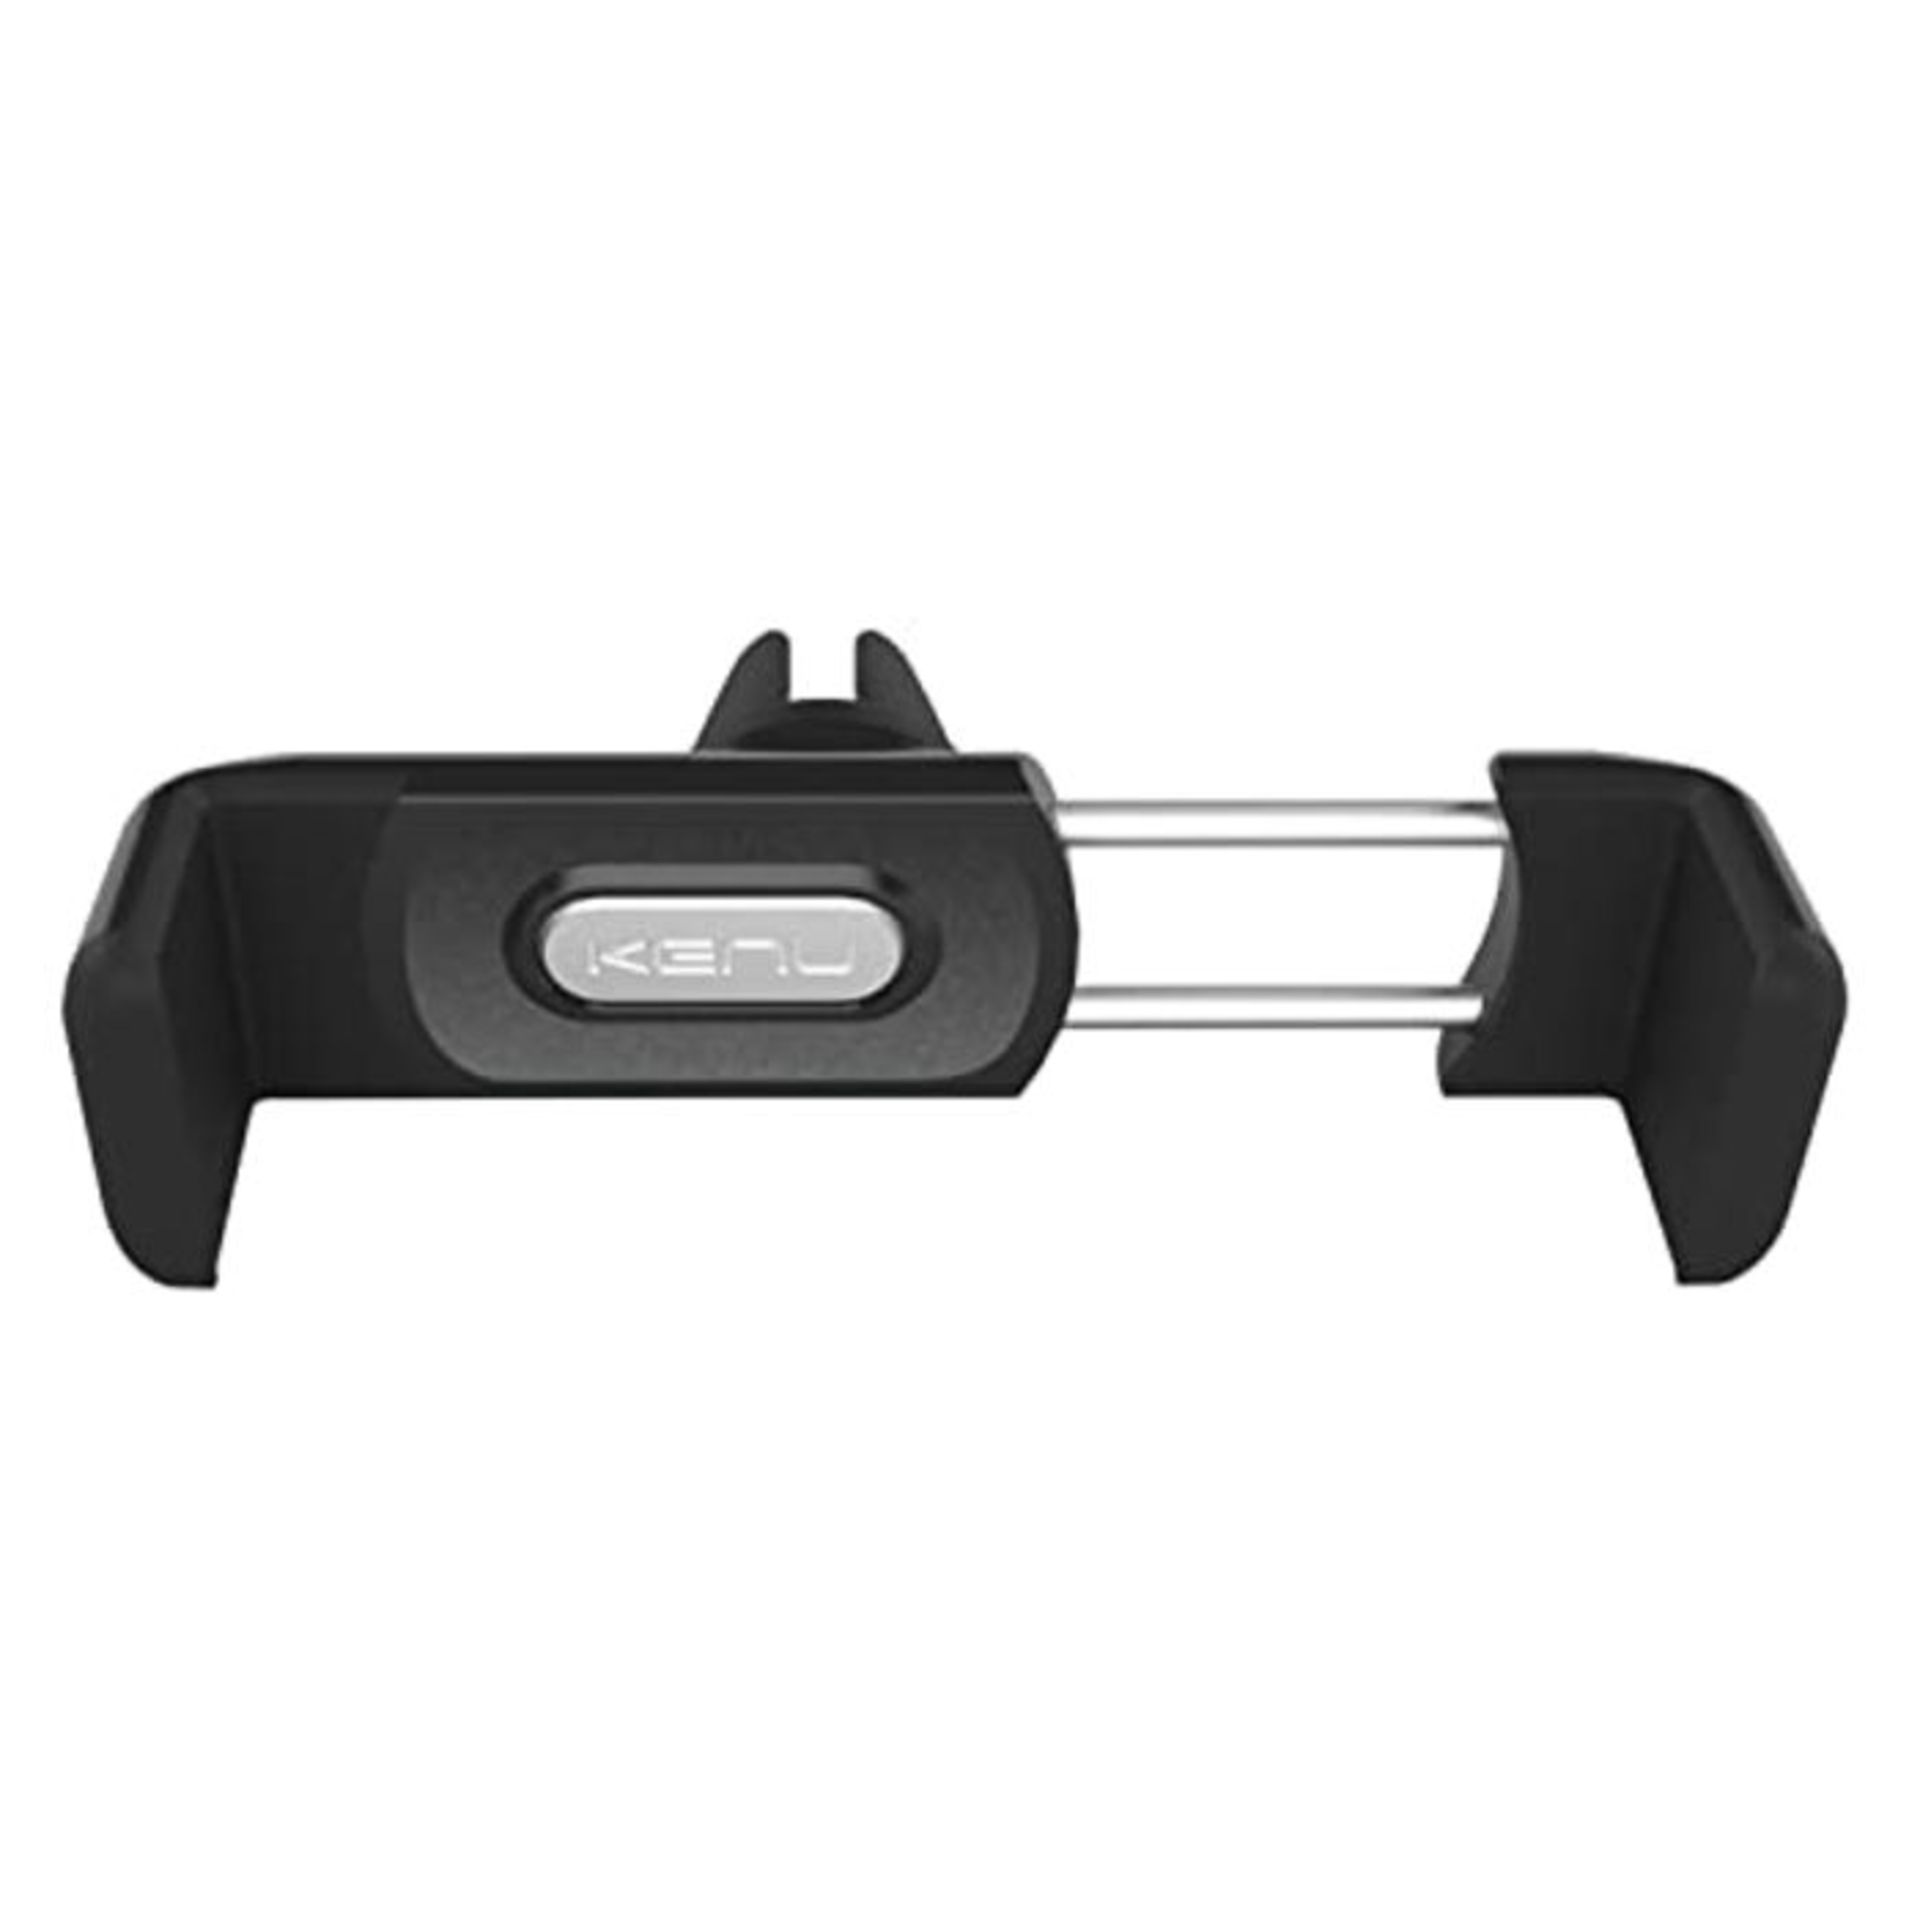 Kenu Airframe+ kenu012 Rotating Air Vent Mobile Phone Cradle Car Holder for Smartphone - Image 4 of 6